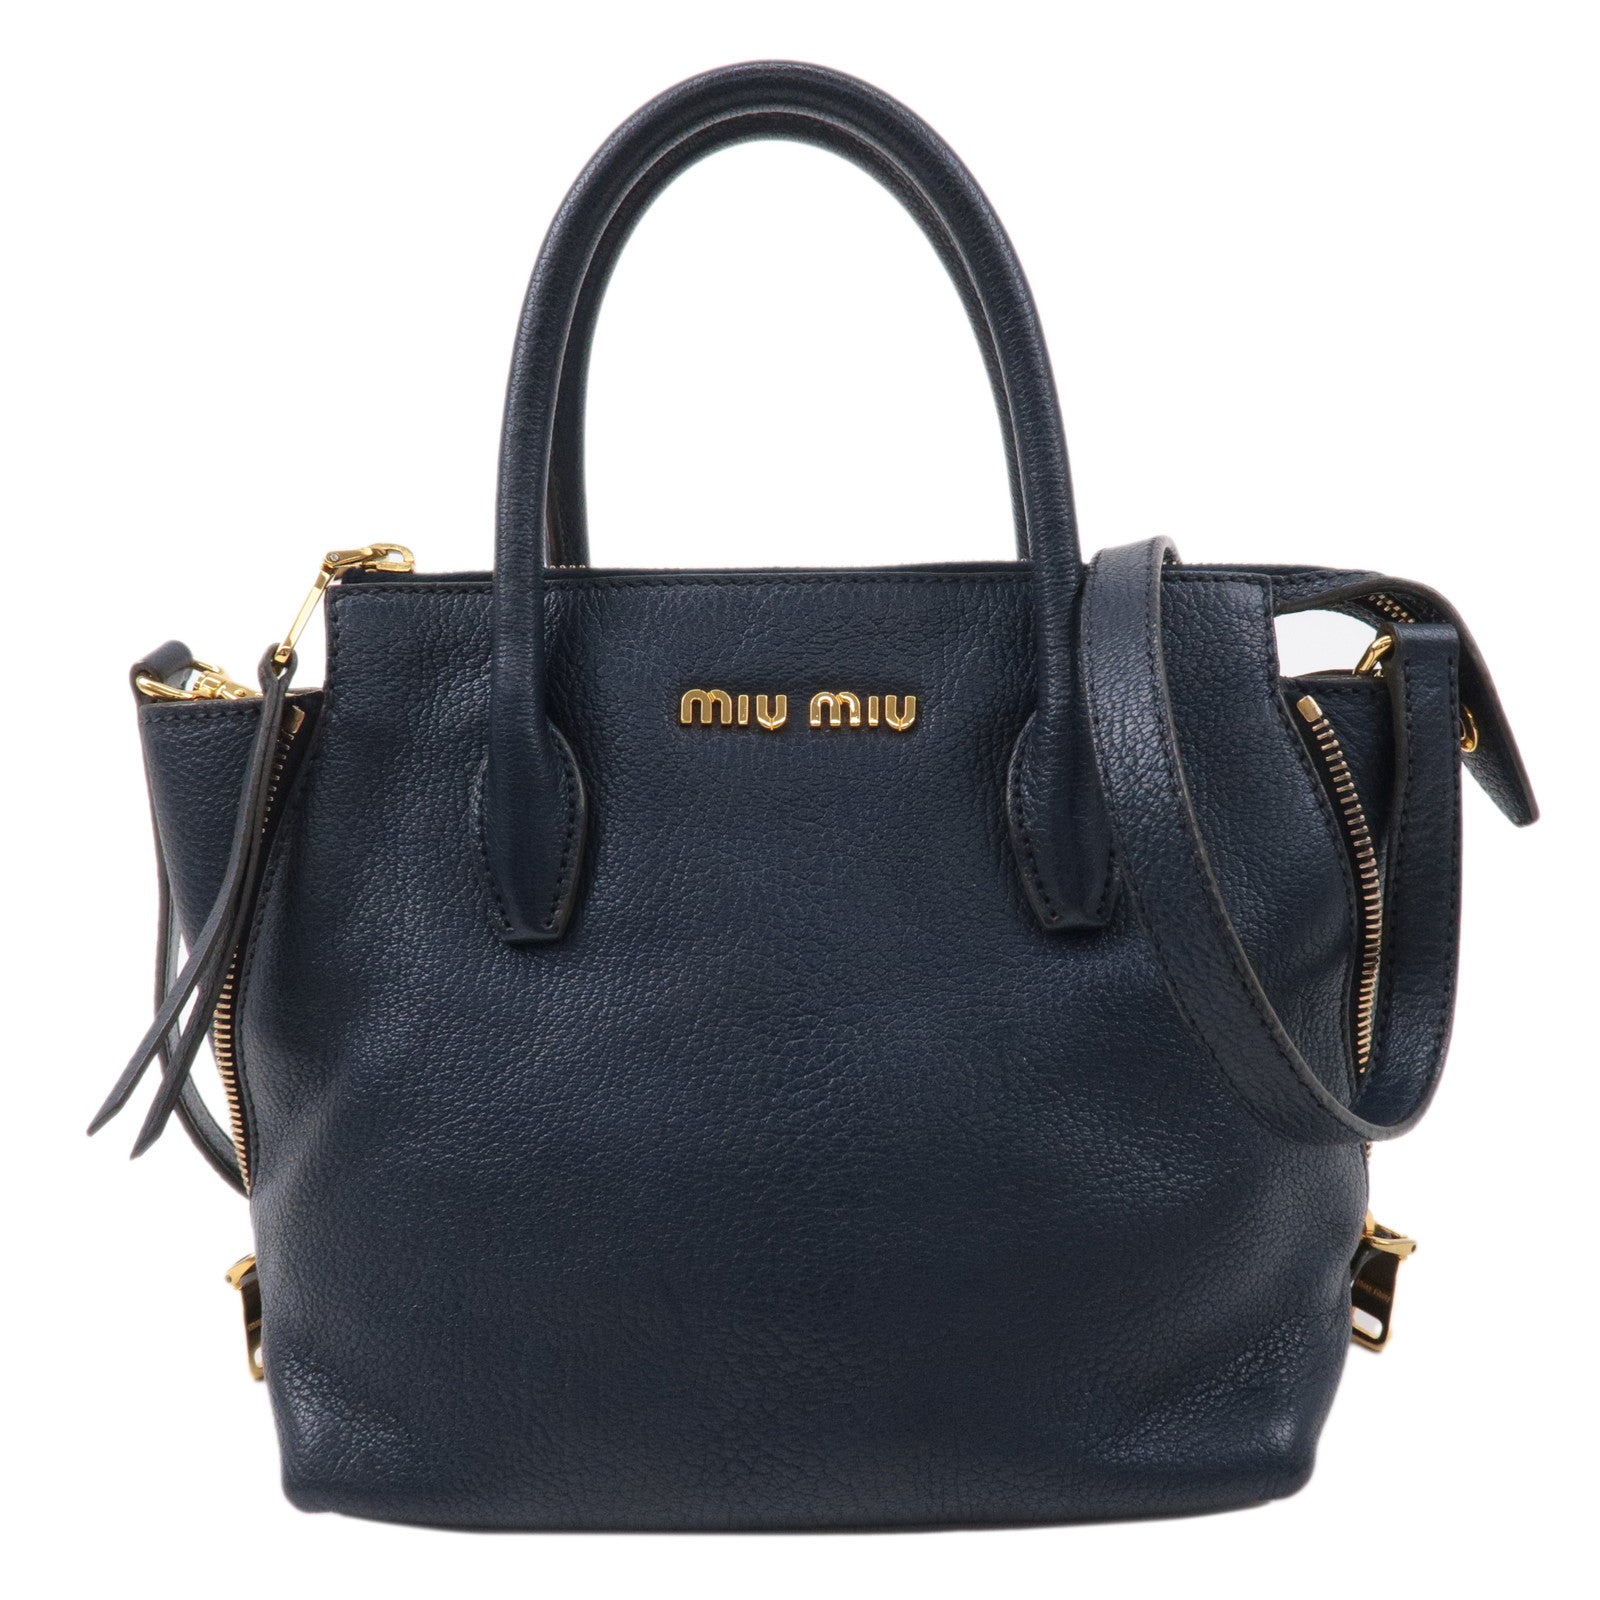 Miu Miu 2way leather shoulder bag